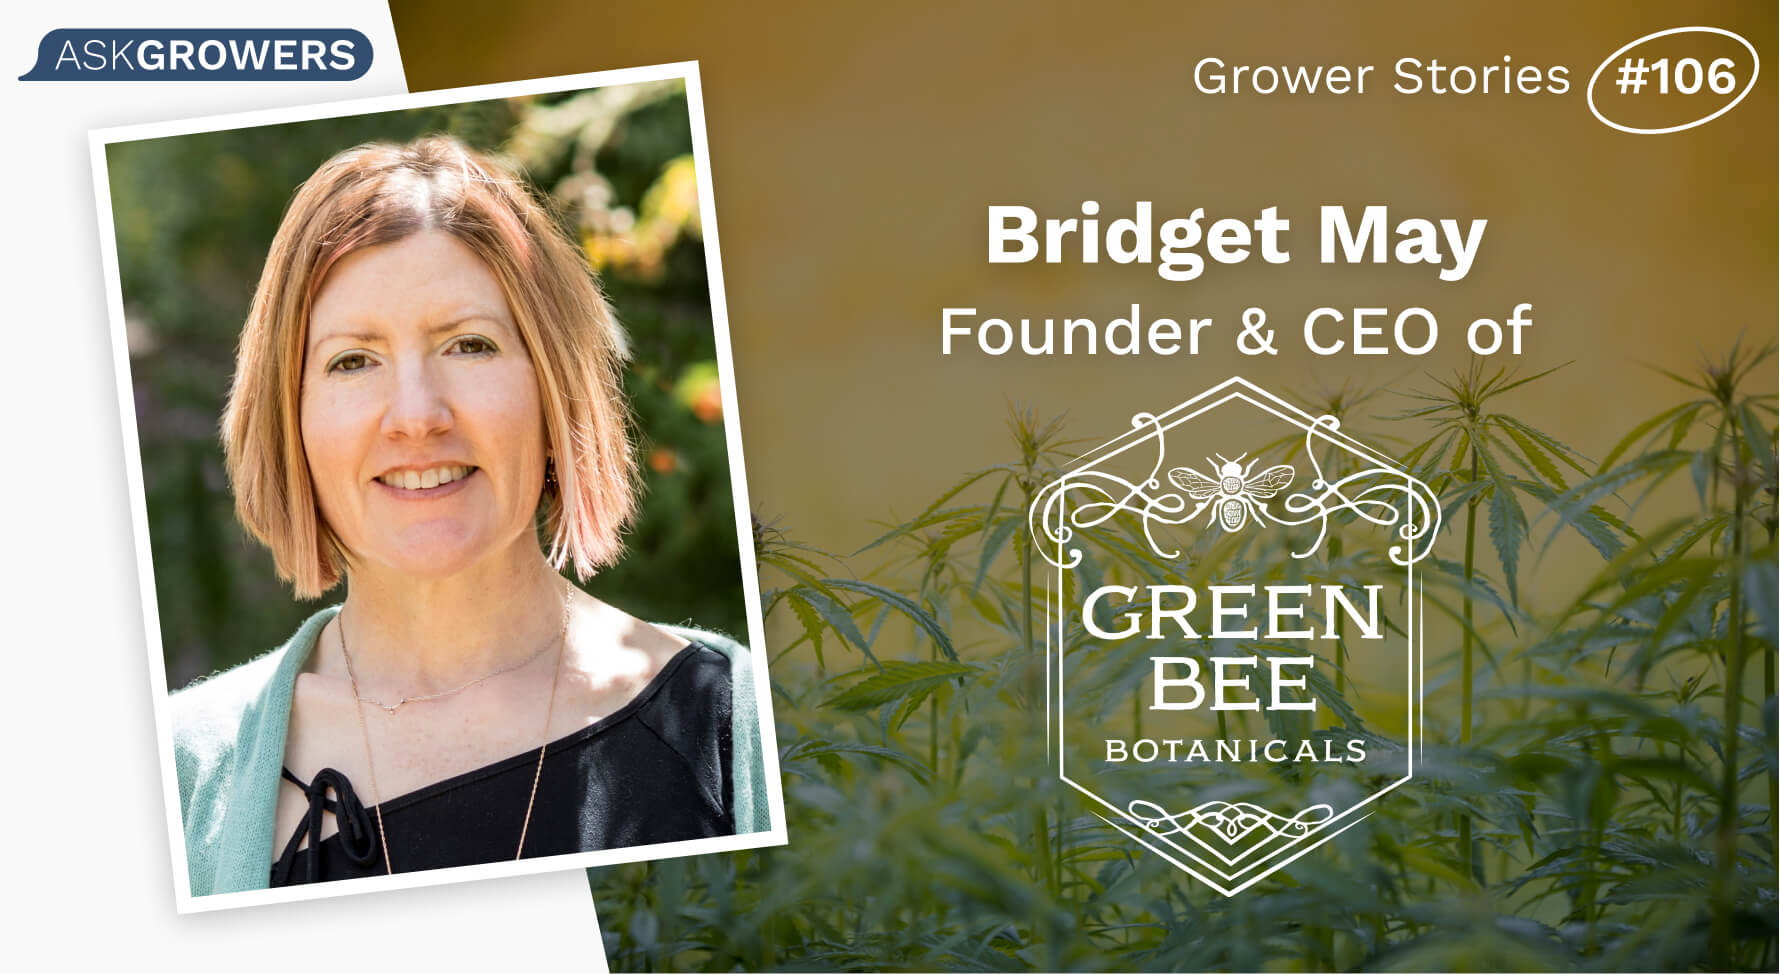 Grower Stories #106: Bridget May